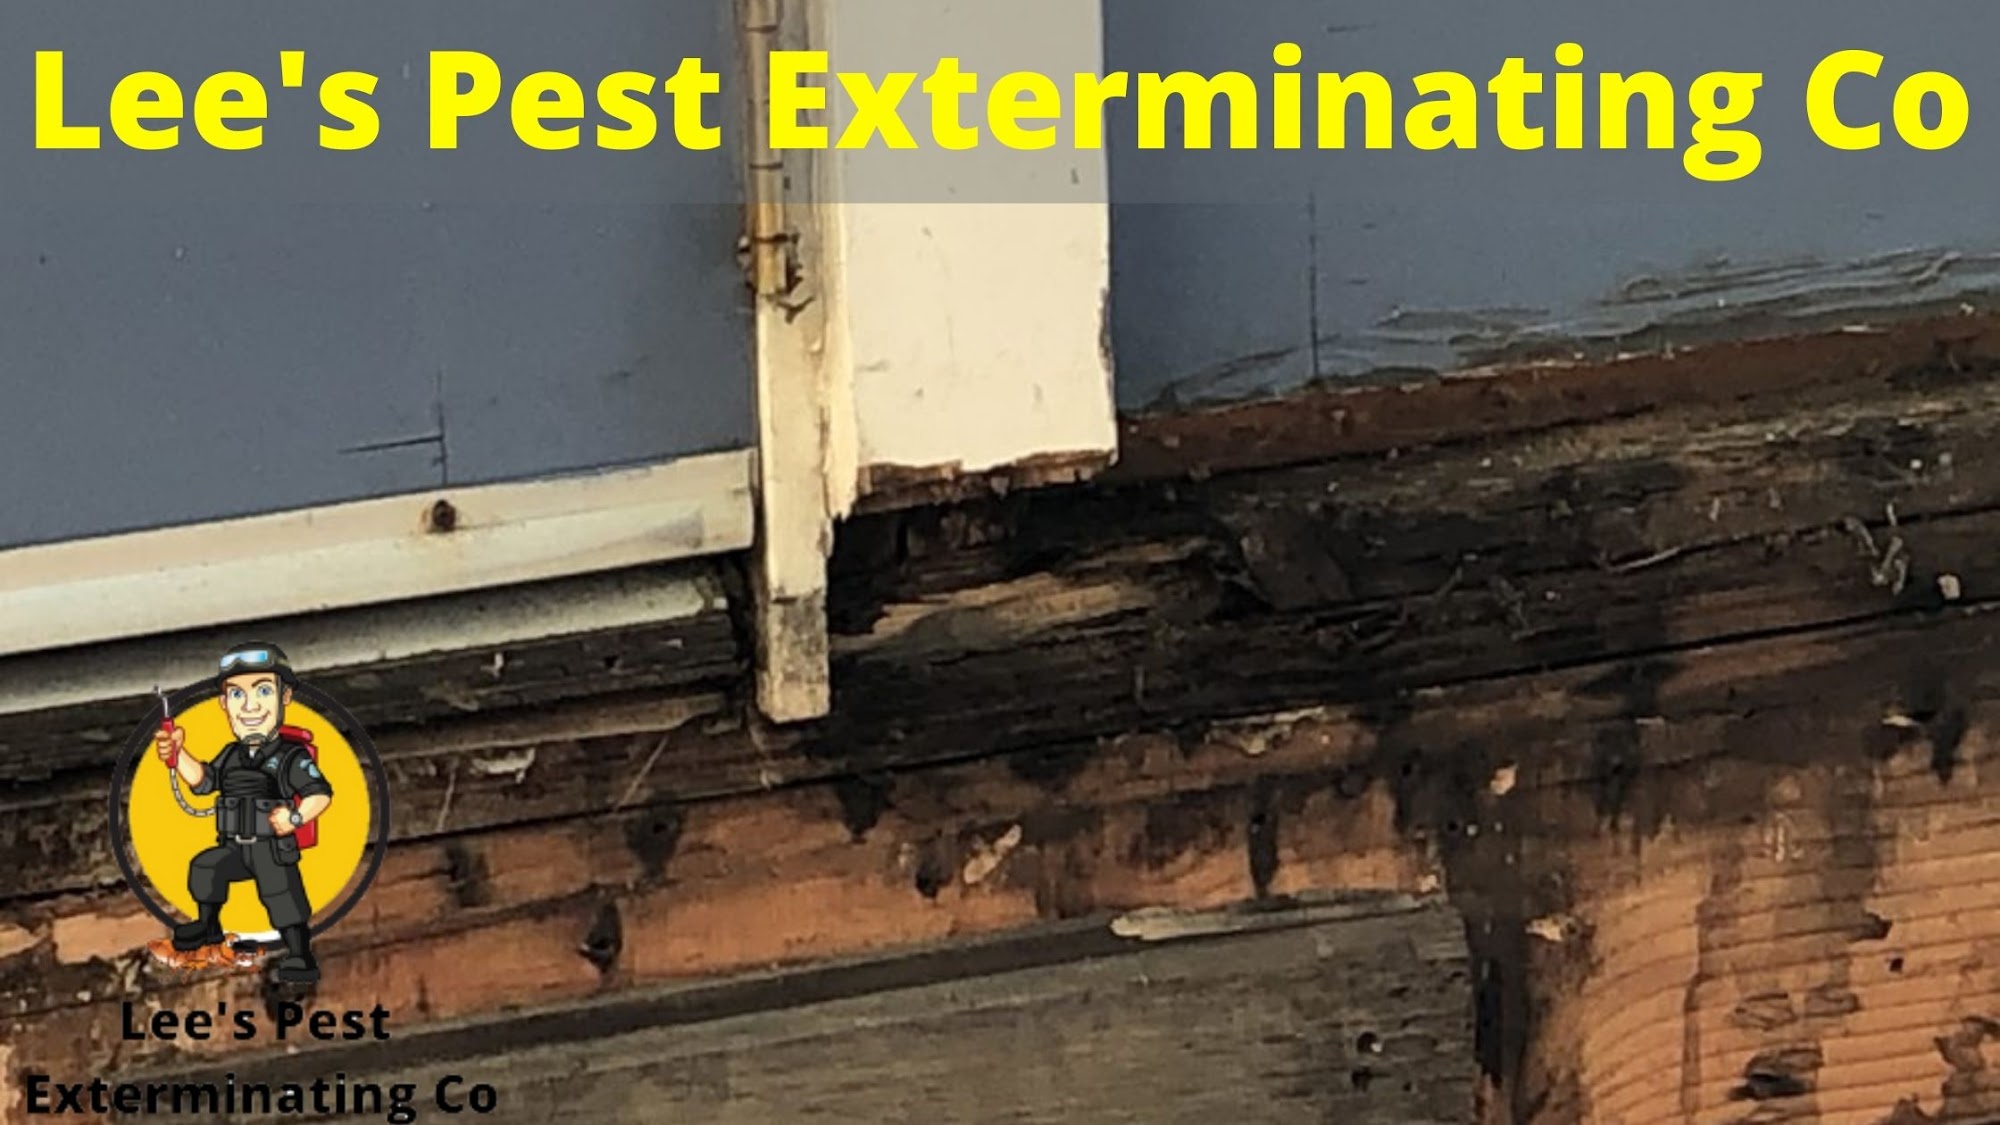 Lee's Pest Exterminating Co